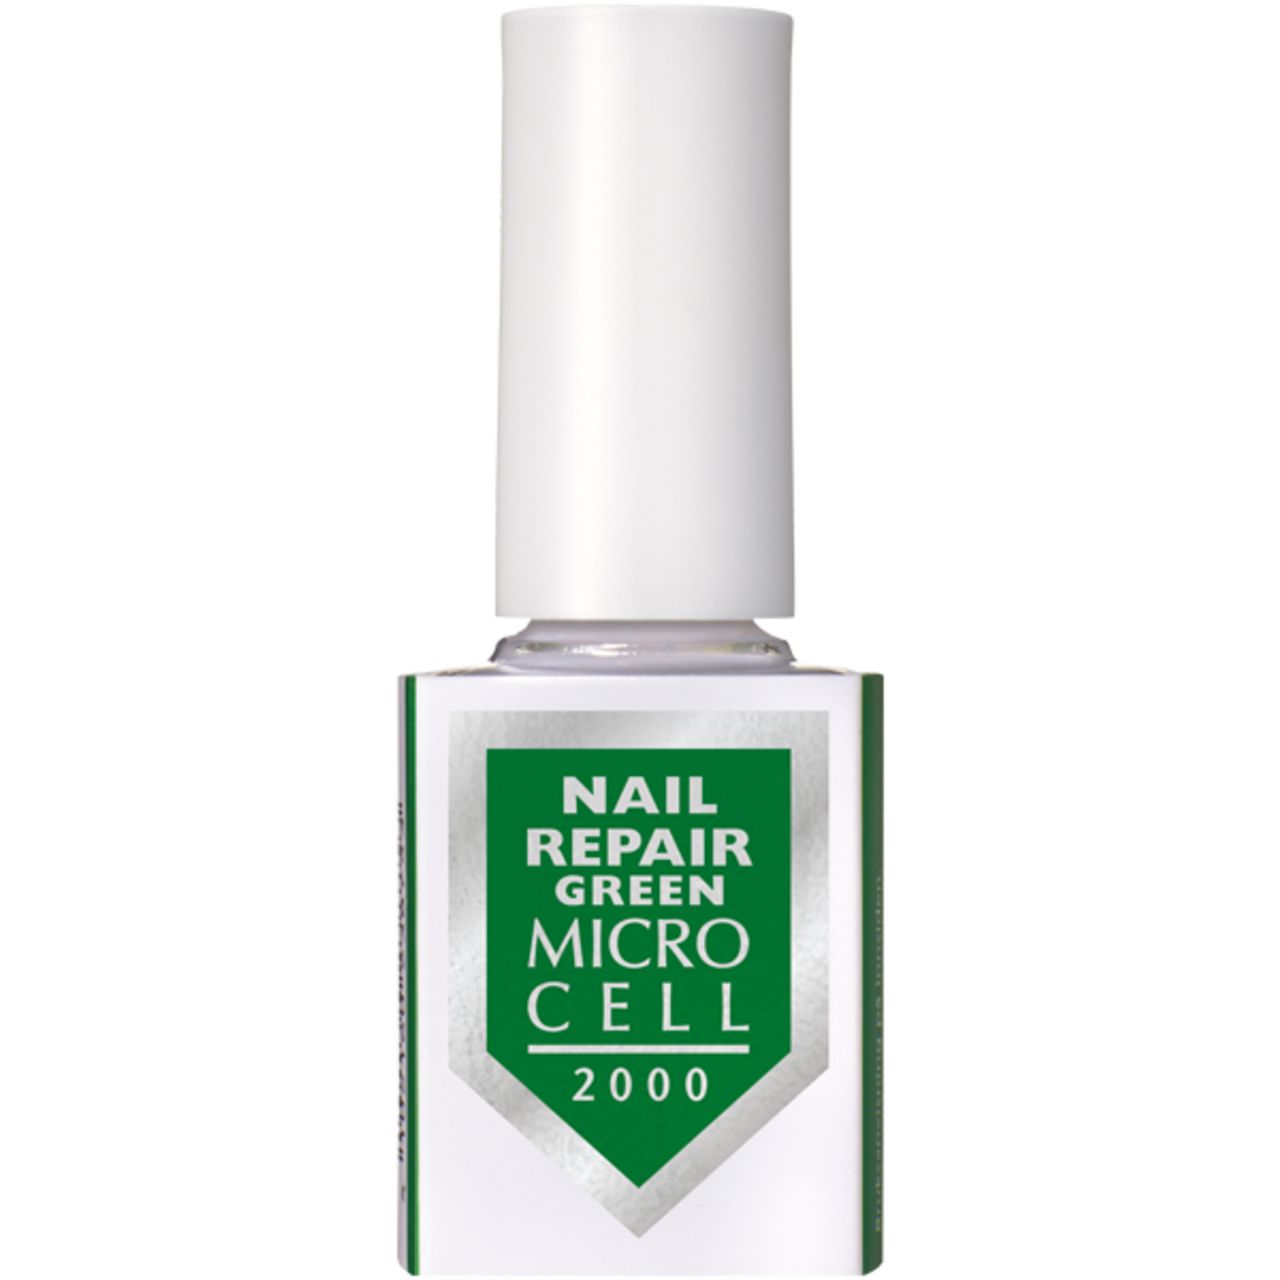 MicroCell Nail Repair Green